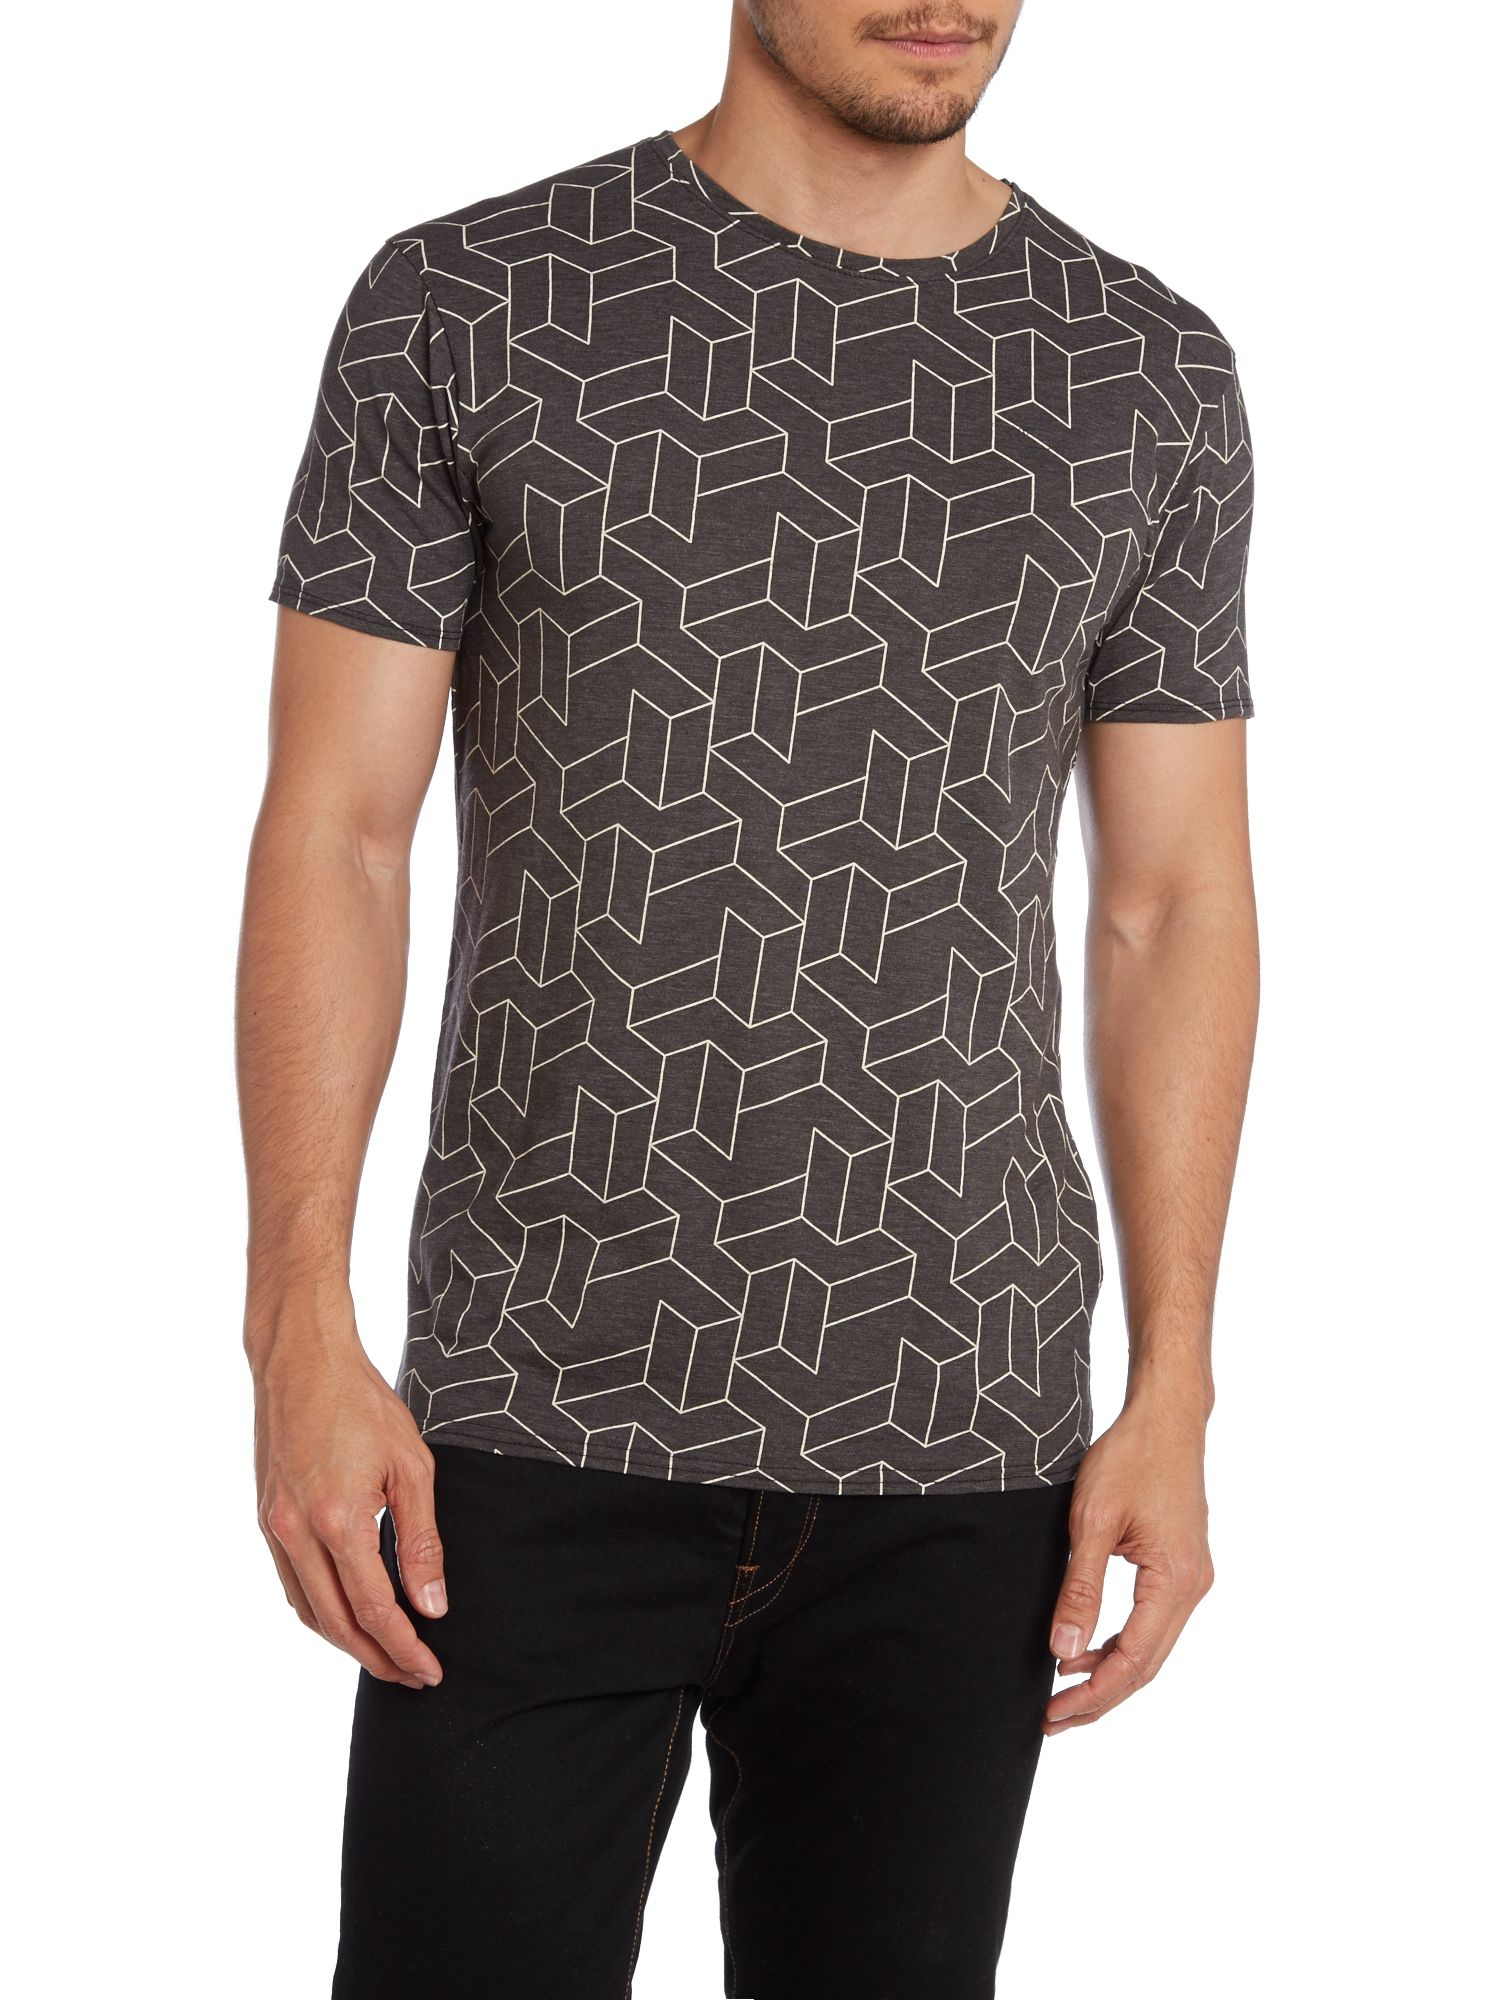 G-star raw Cubic Geometric Print T Shirt in Black for Men | Lyst